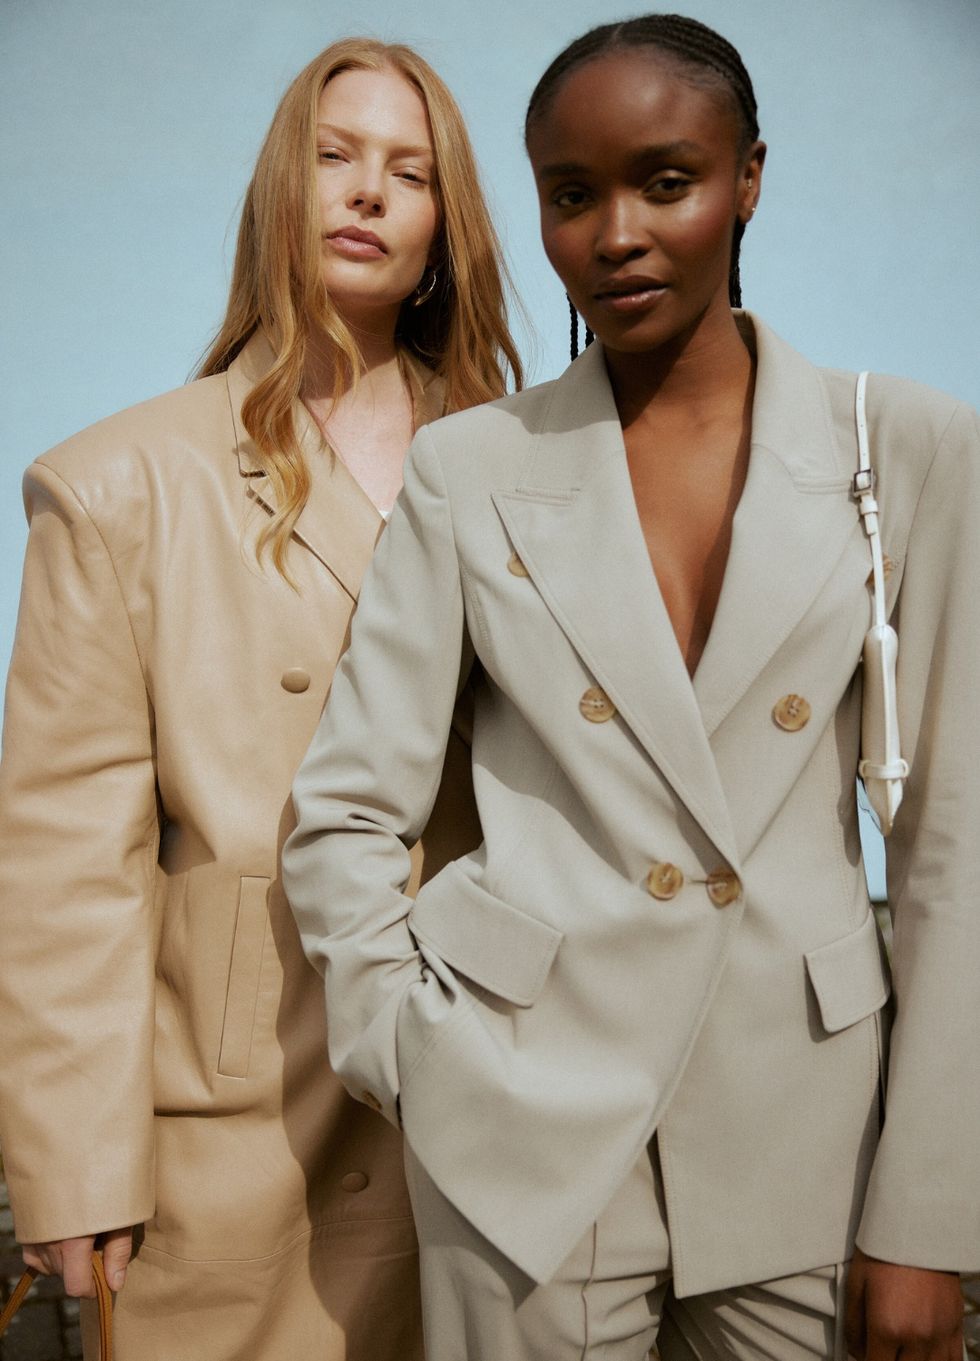 hurr rental flex featuring two models wearing beige oversized suits